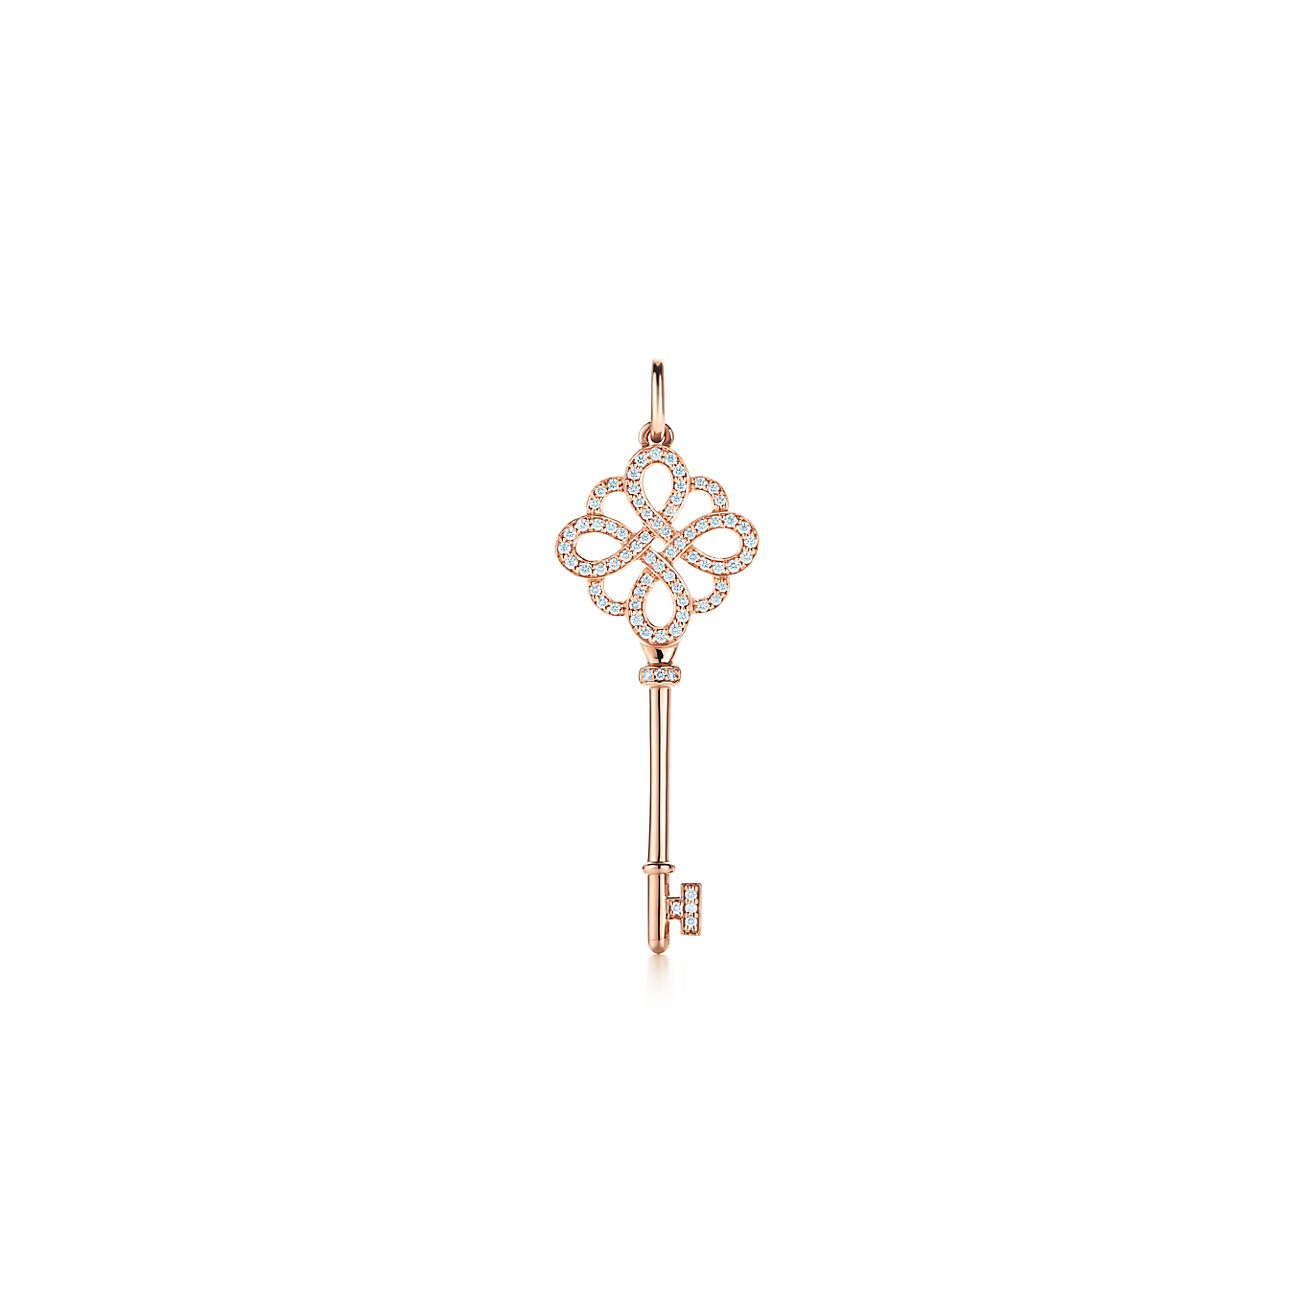 Tiffany Keys 18K玫瑰金鑲鑽結形鑰匙鍊墜 